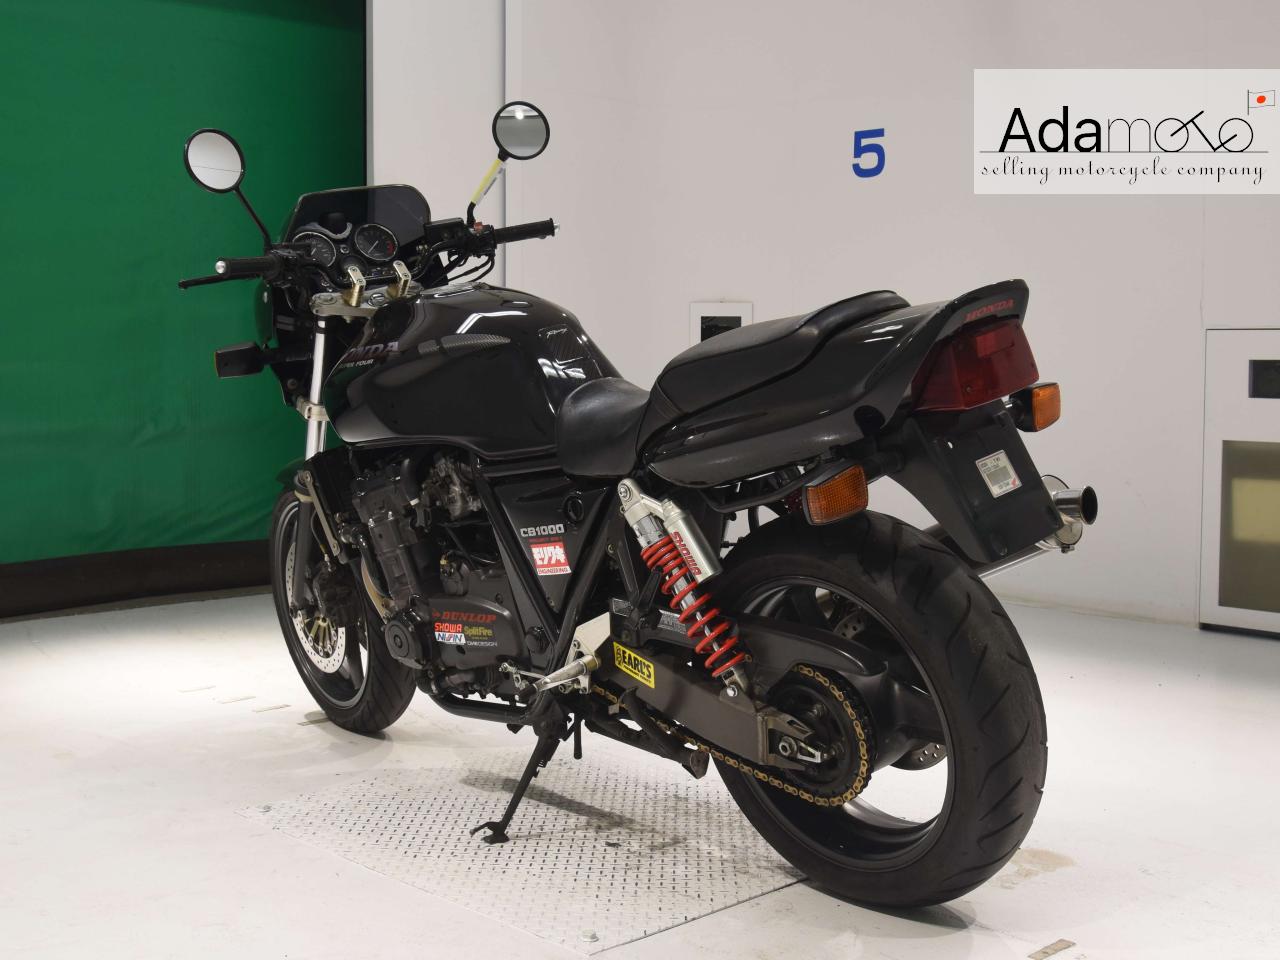 Honda CB1000SF T2 - Adamoto - Motorcycles from Japan